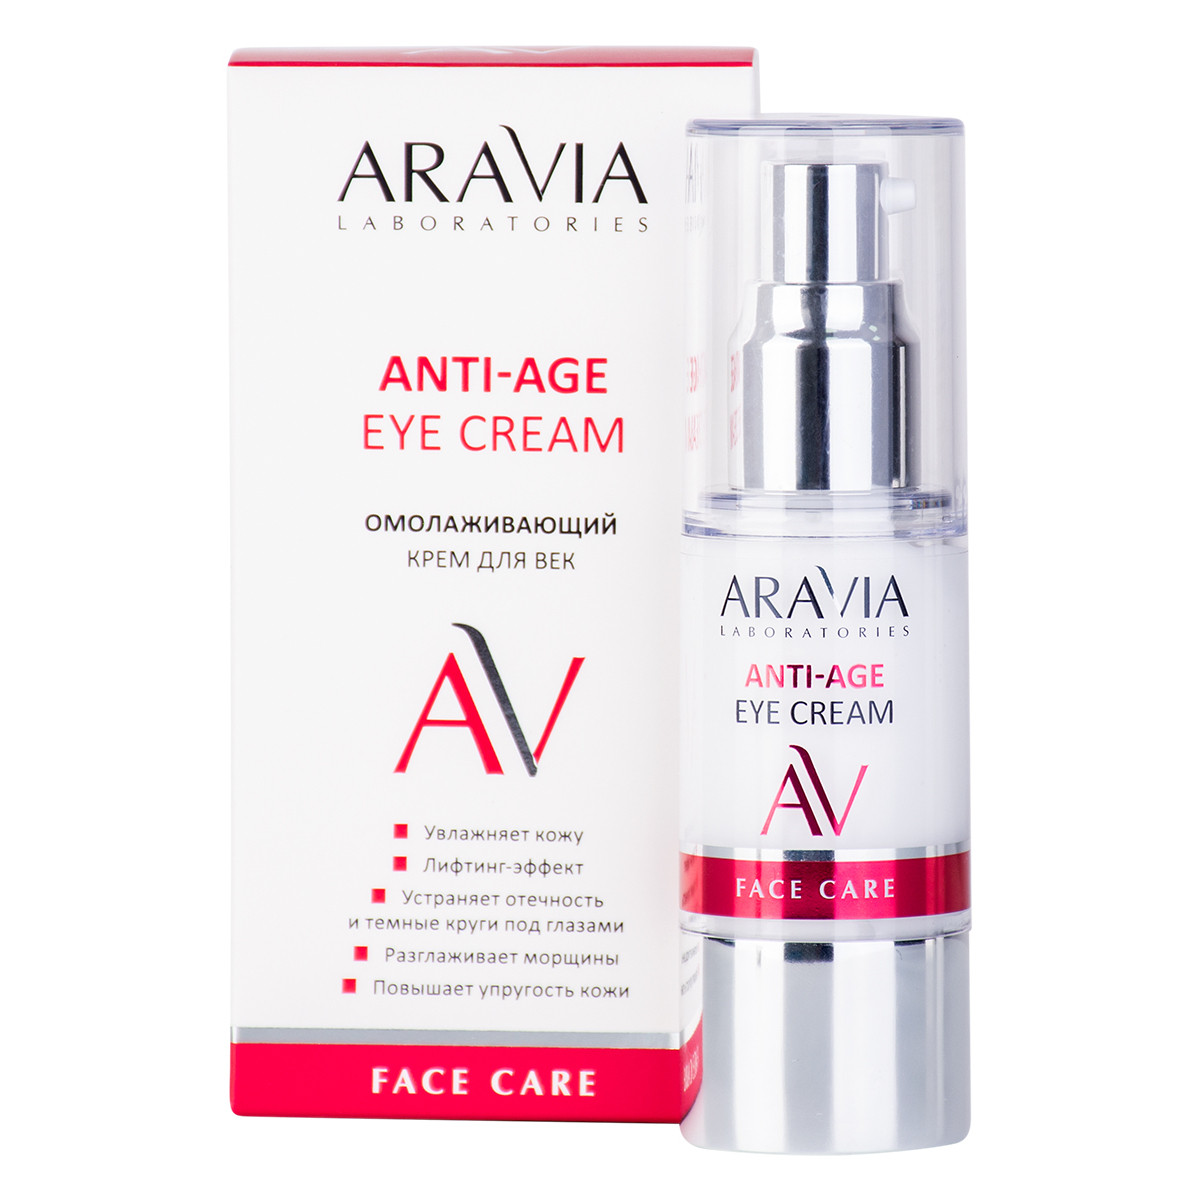 ARAVIA Laboratories Омолаживающий крем для век Anti-Age Eye Cream, 30 мл/15